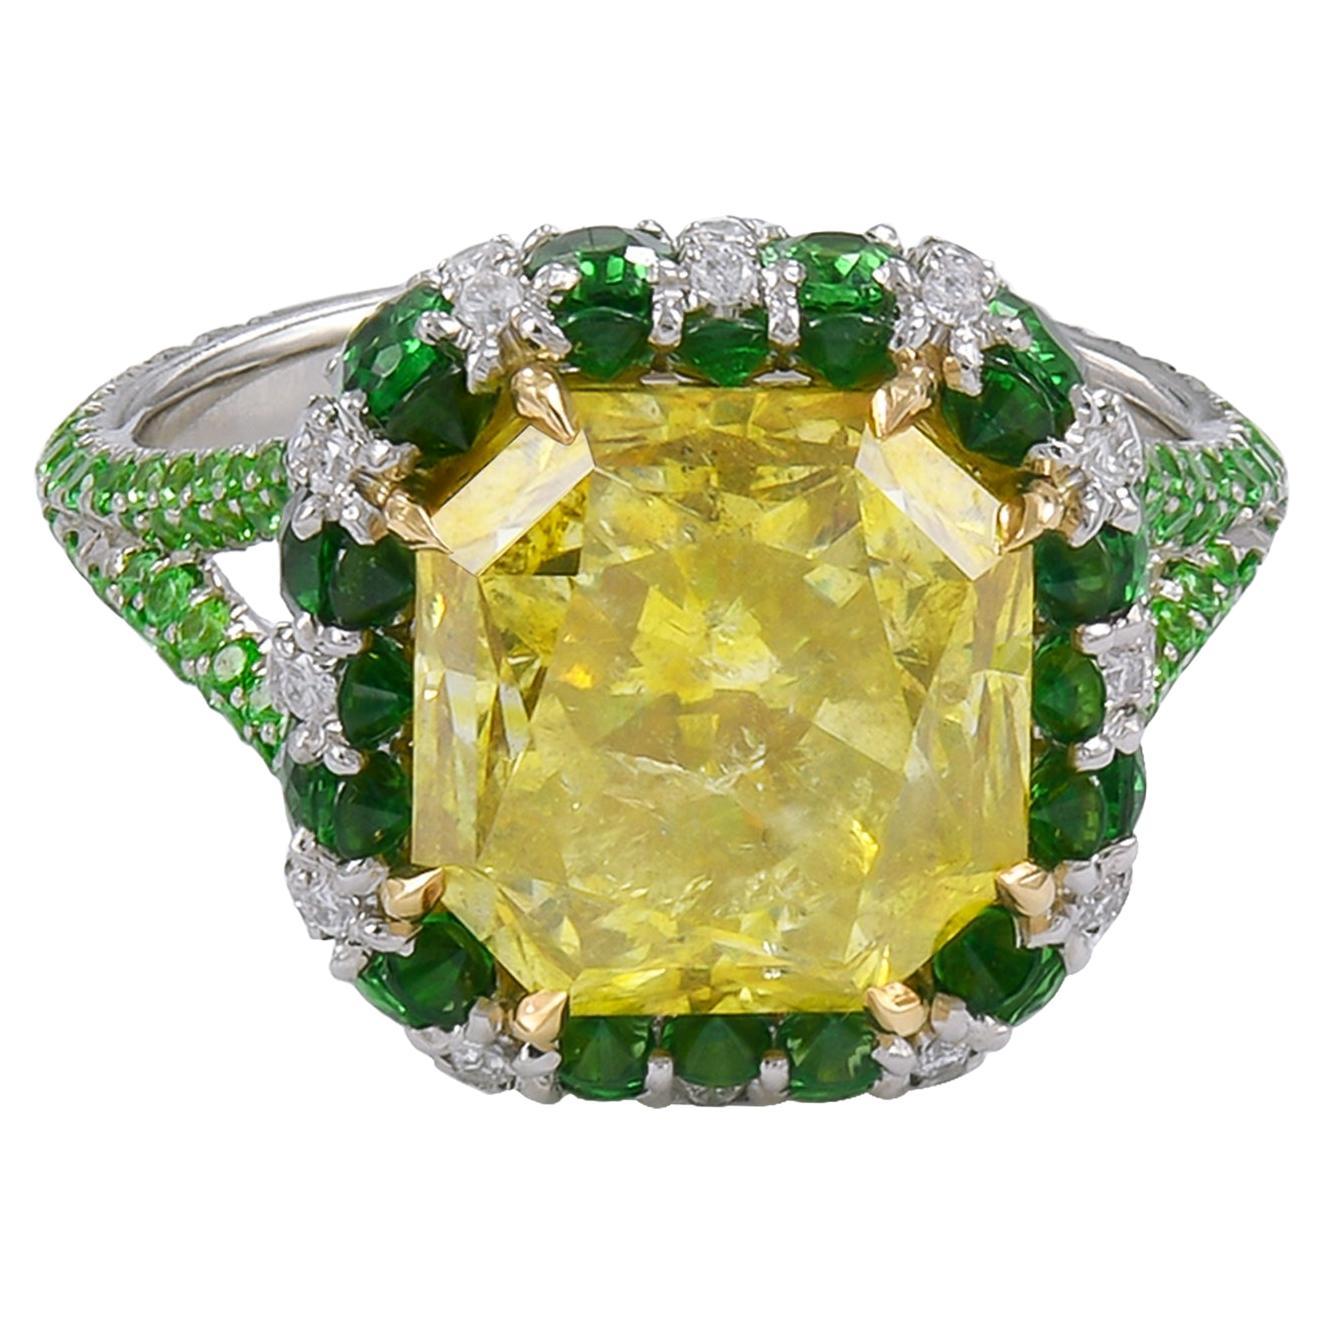 GIA Certified 5.87 Carat Fancy Deep Yellow Diamond Ring